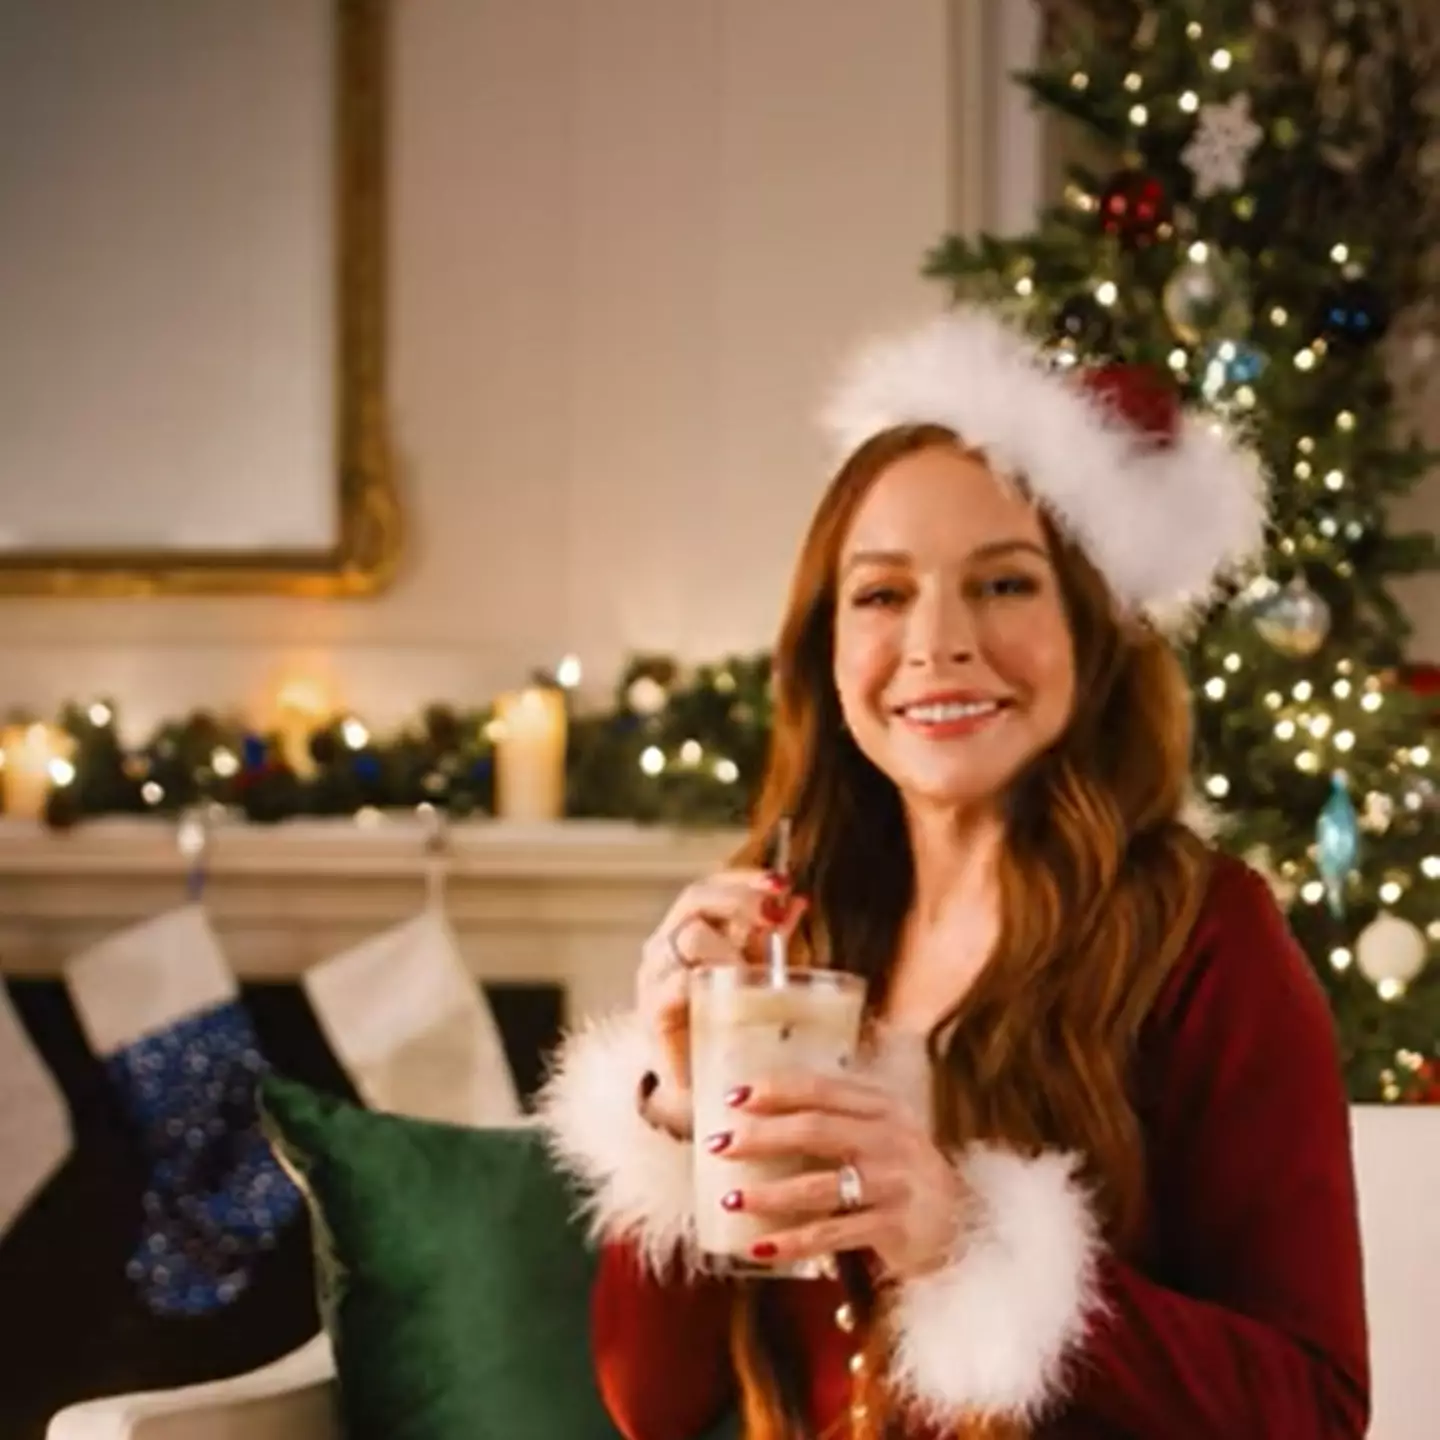 Lindsay Lohan advertised the new 'Pilk' drink.